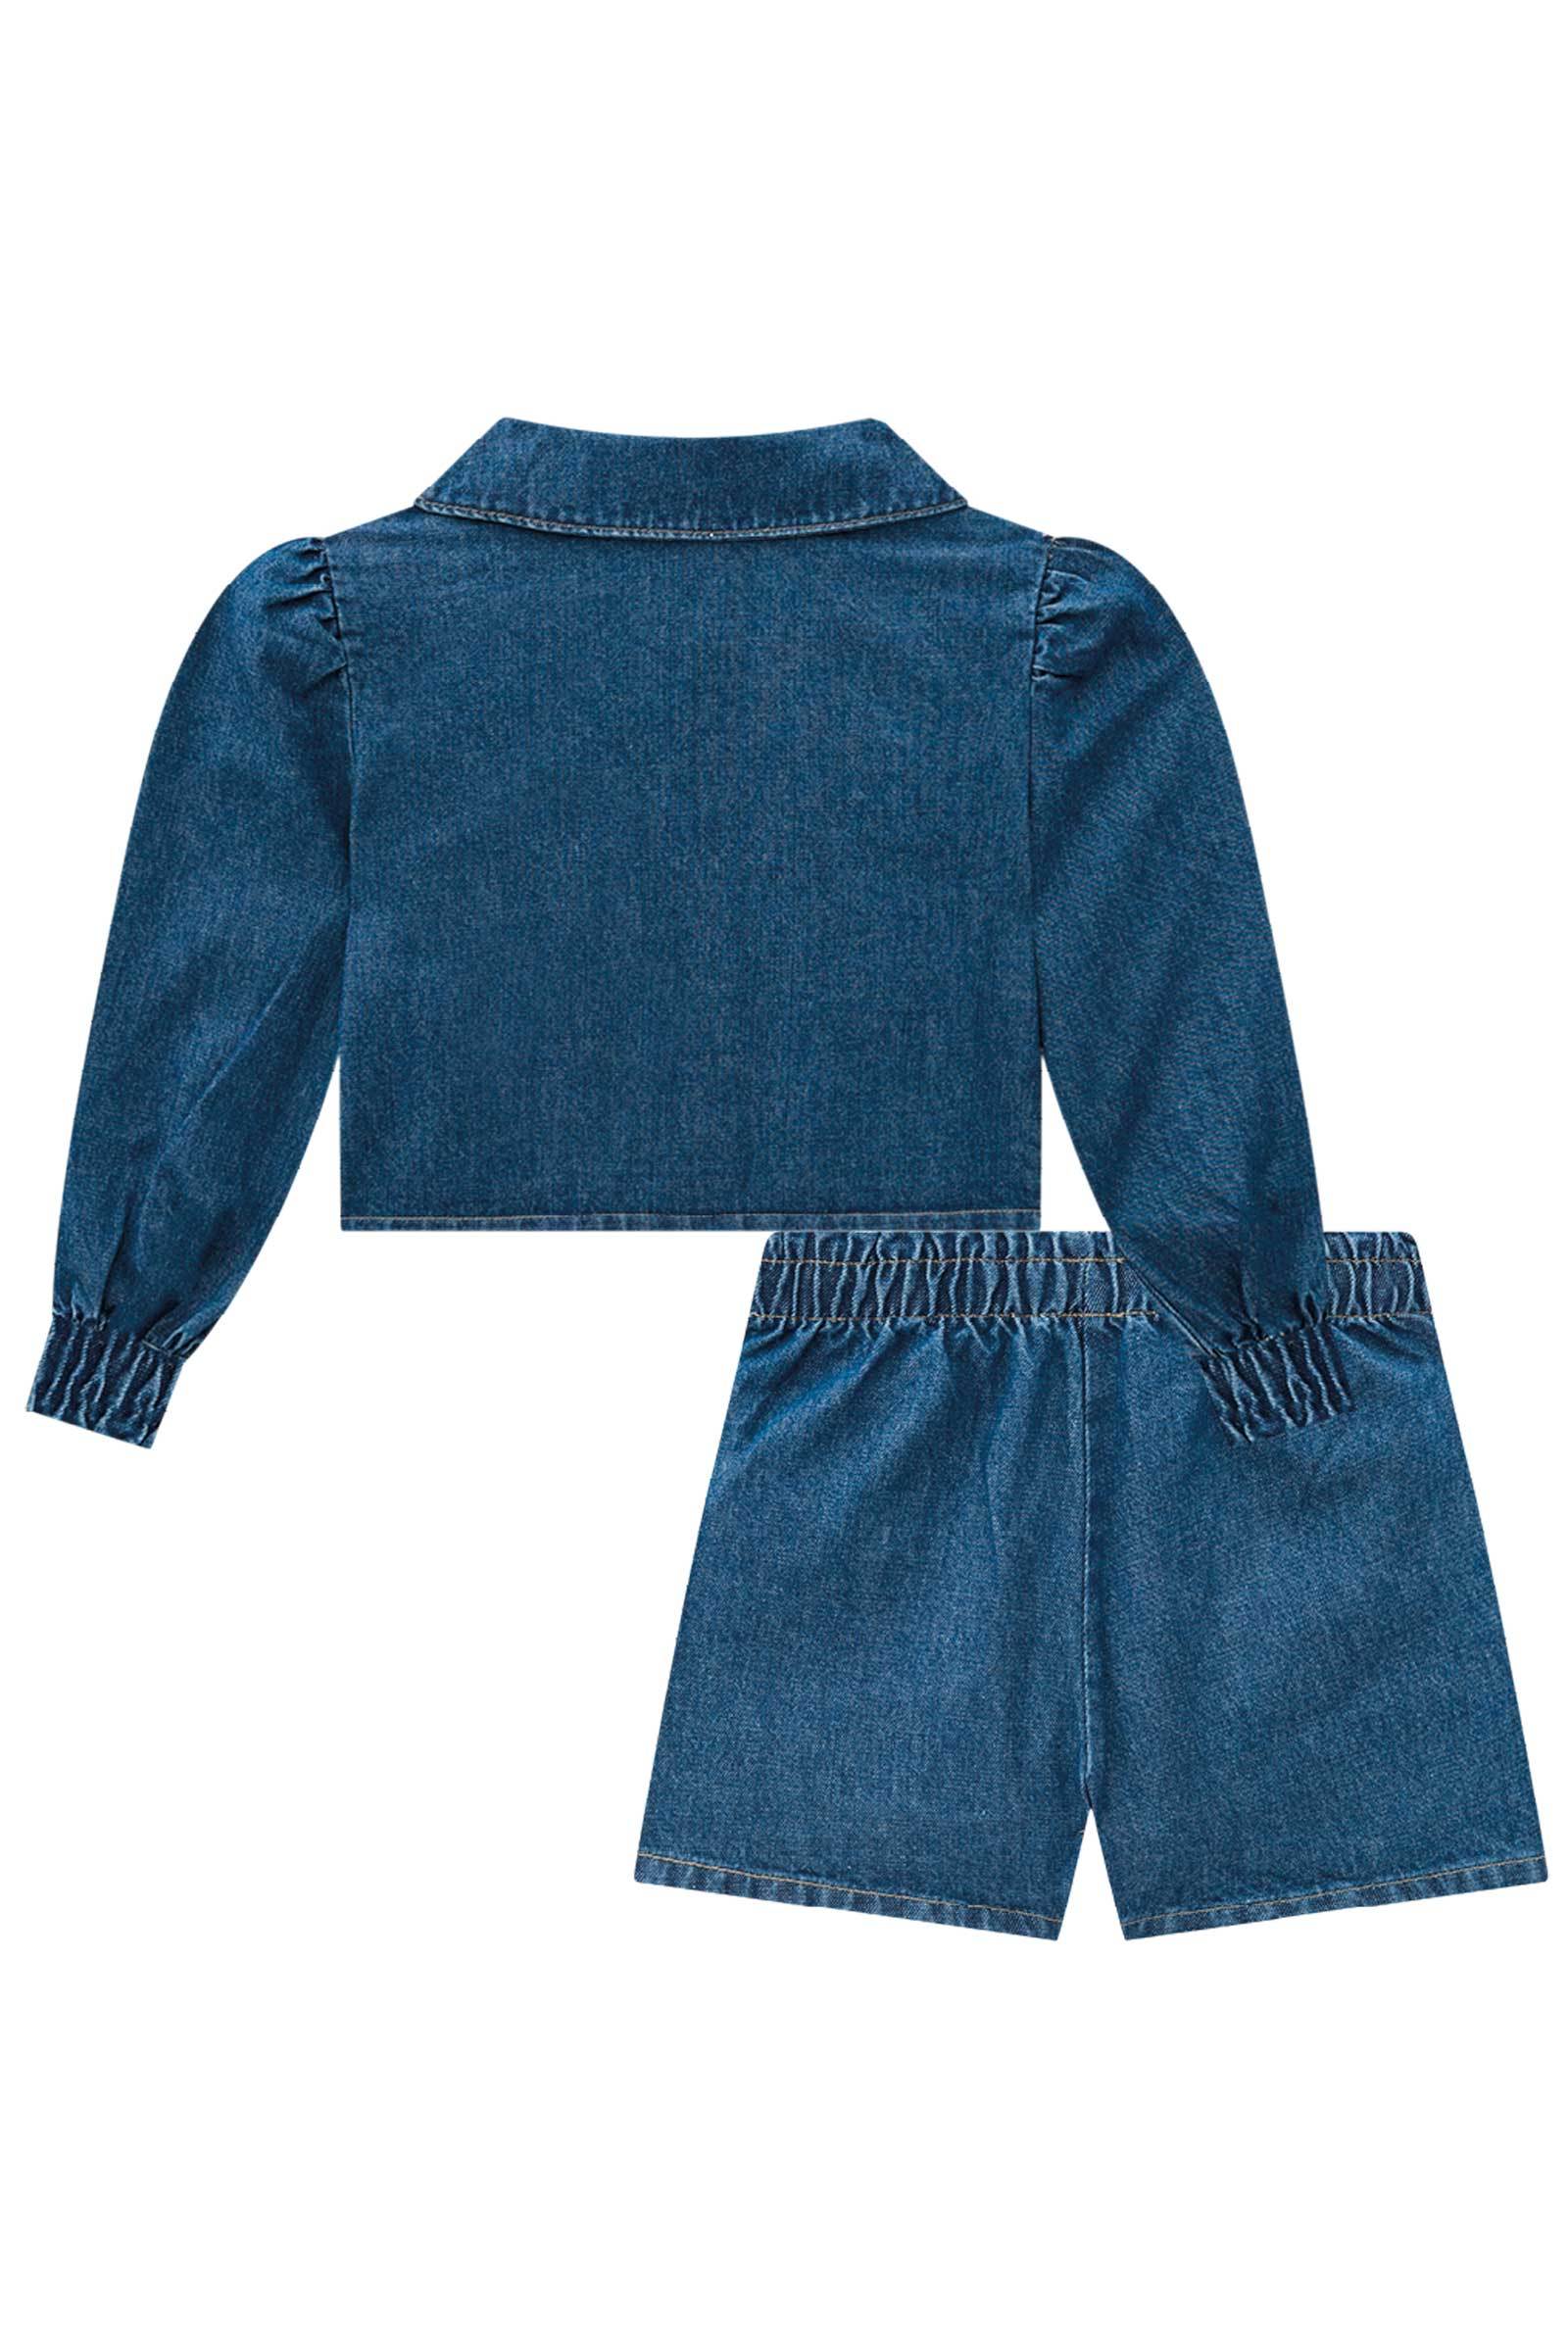 Conjunto de Jaqueta Boxy e Shorts em Jeans Arkansas 71784 Infanti